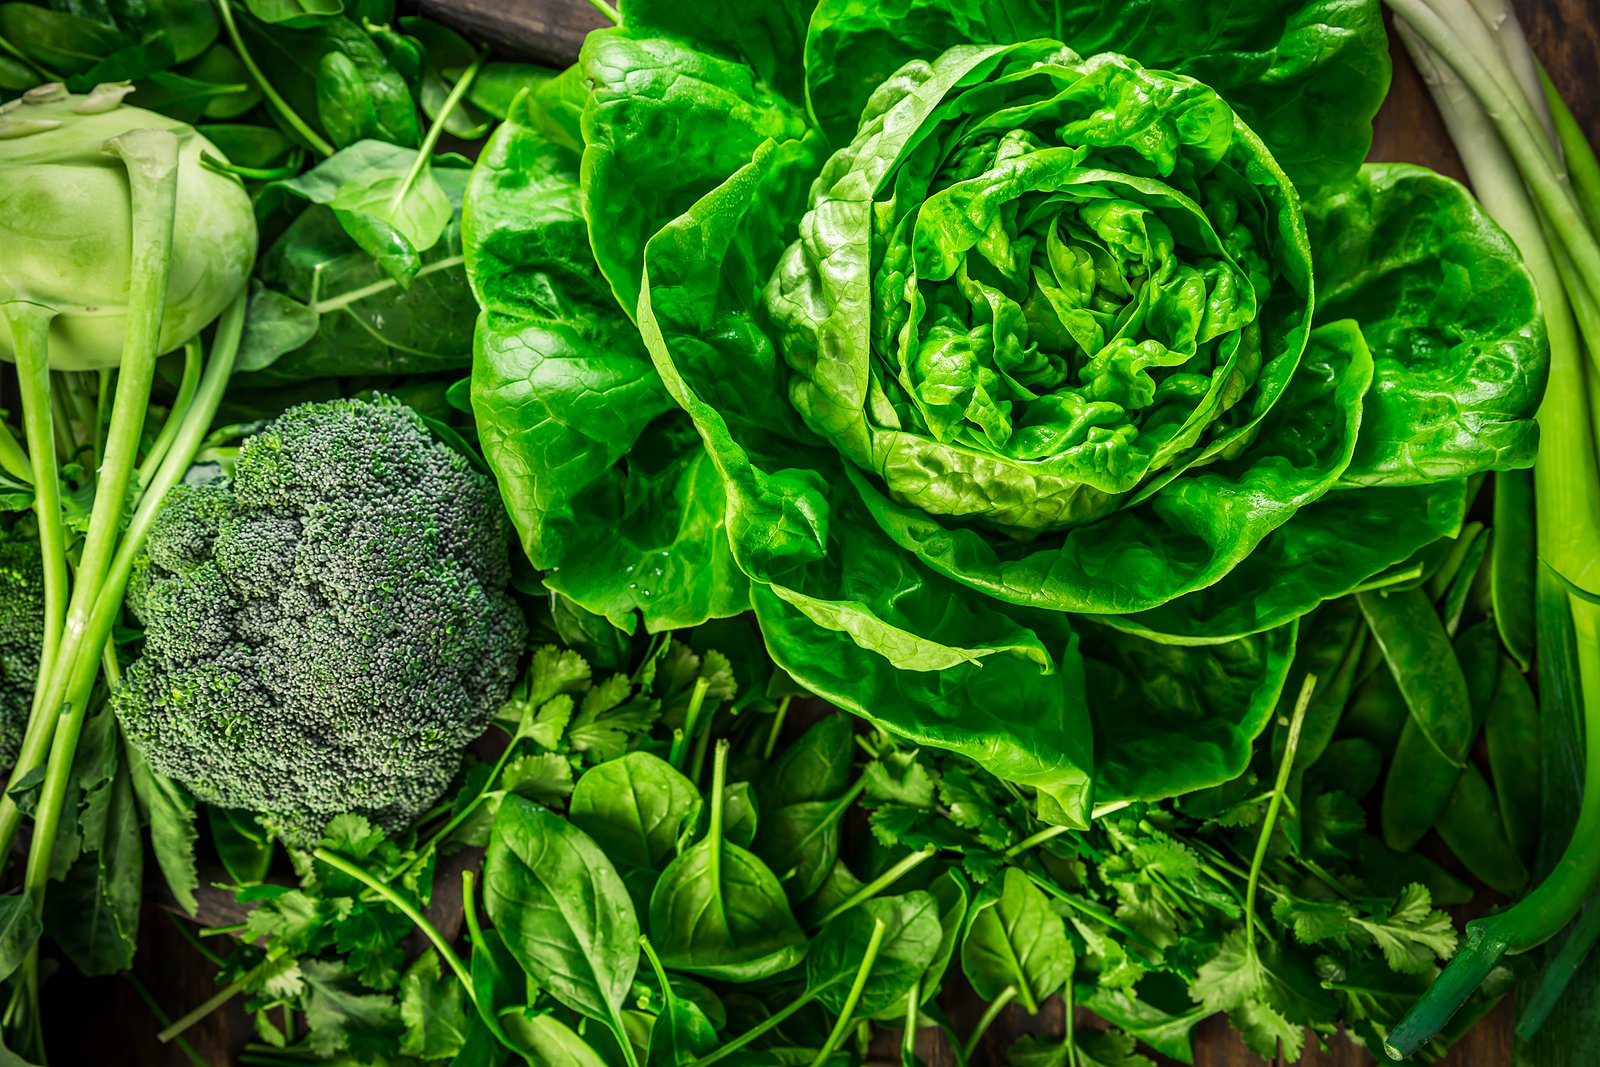 bigstock-Green-Organic-Vegetables-And-D-469001803